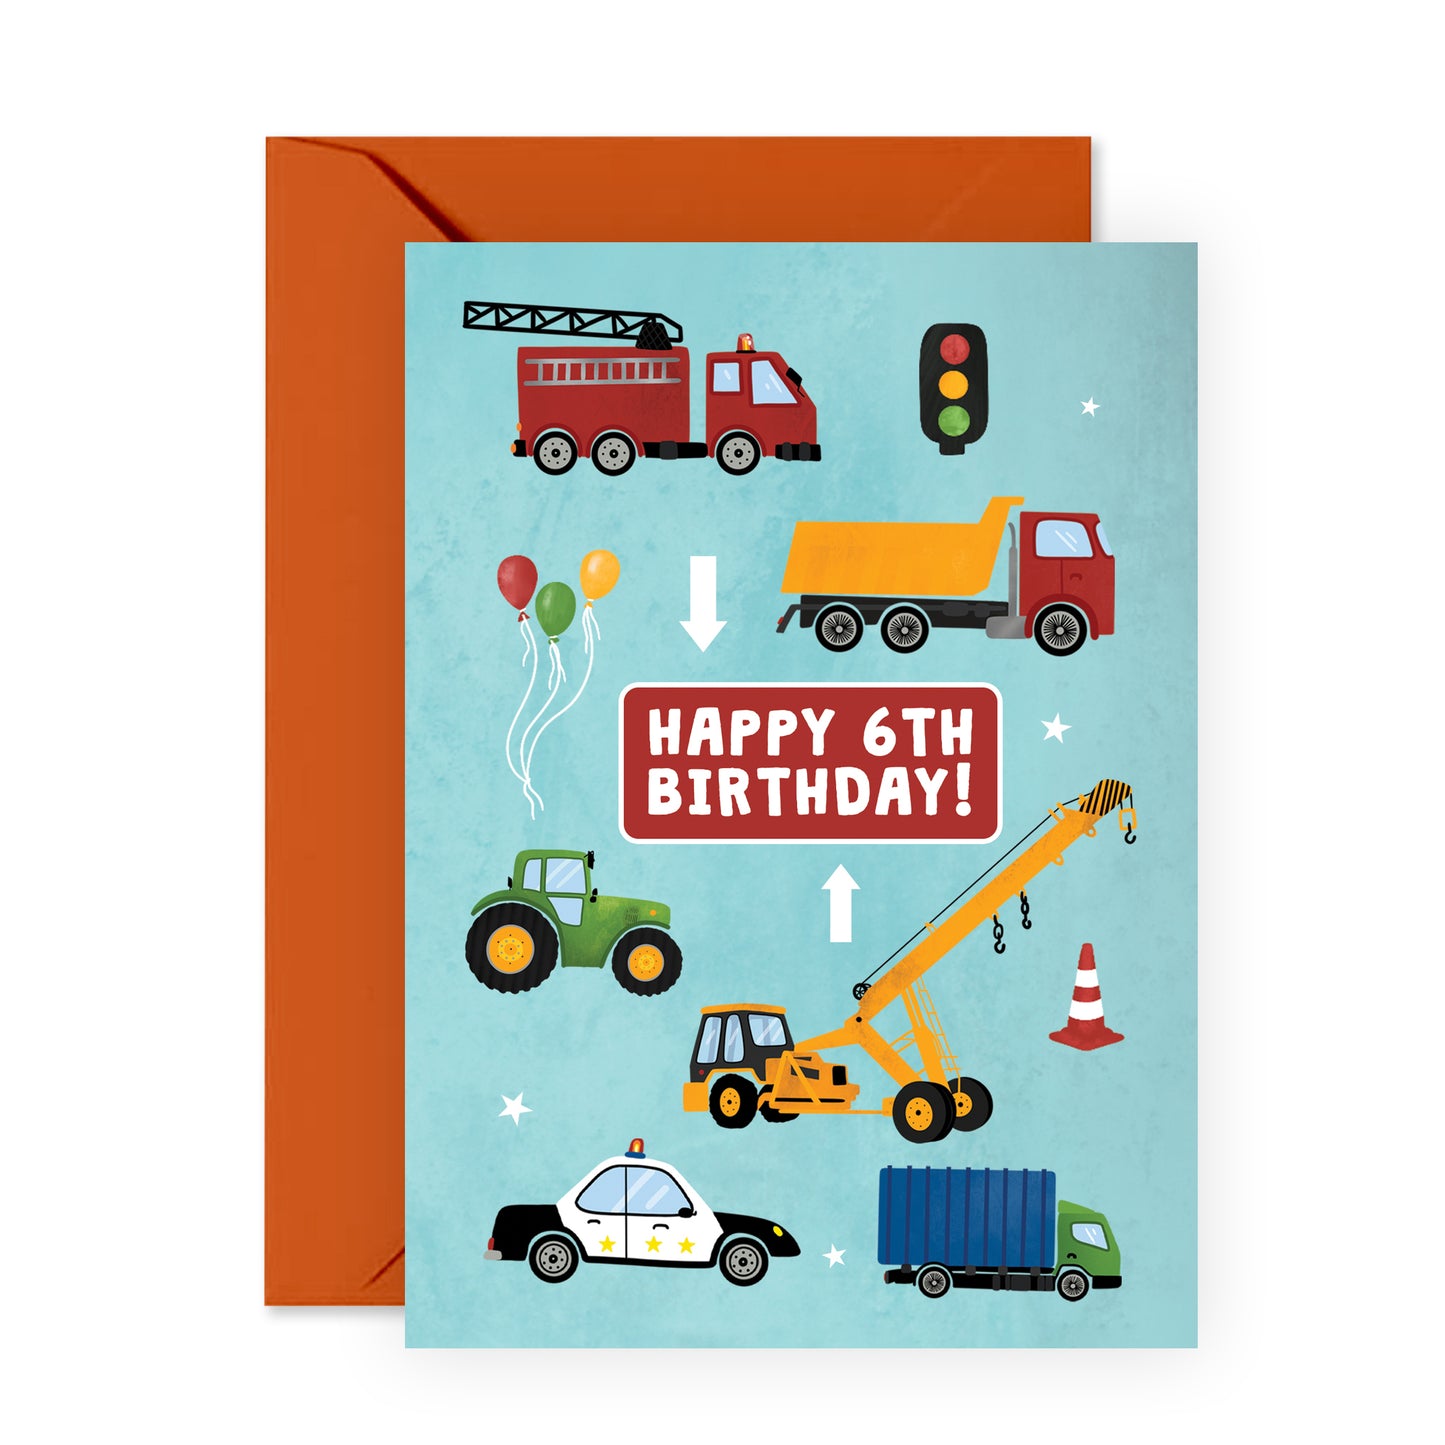 Sixth Birthday Card - Happy 6th Birthday Vehicle - For Kids Boys Him